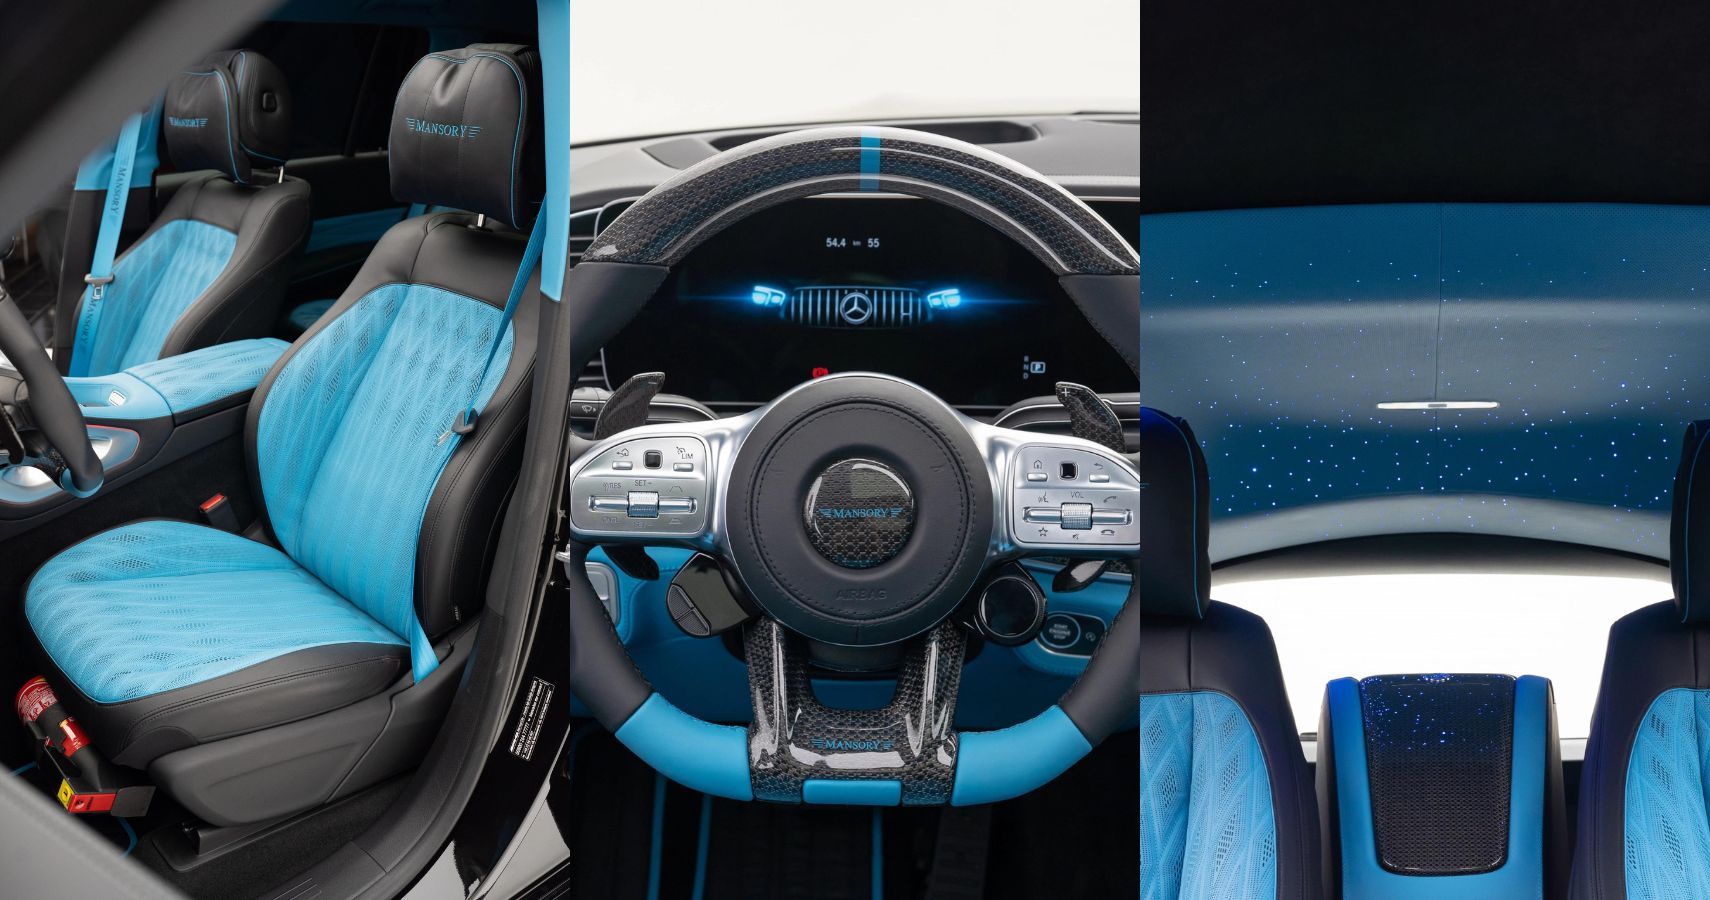 Mansory Mercedes-AMG GLS 63 interior in a bright blue dual-tone shade